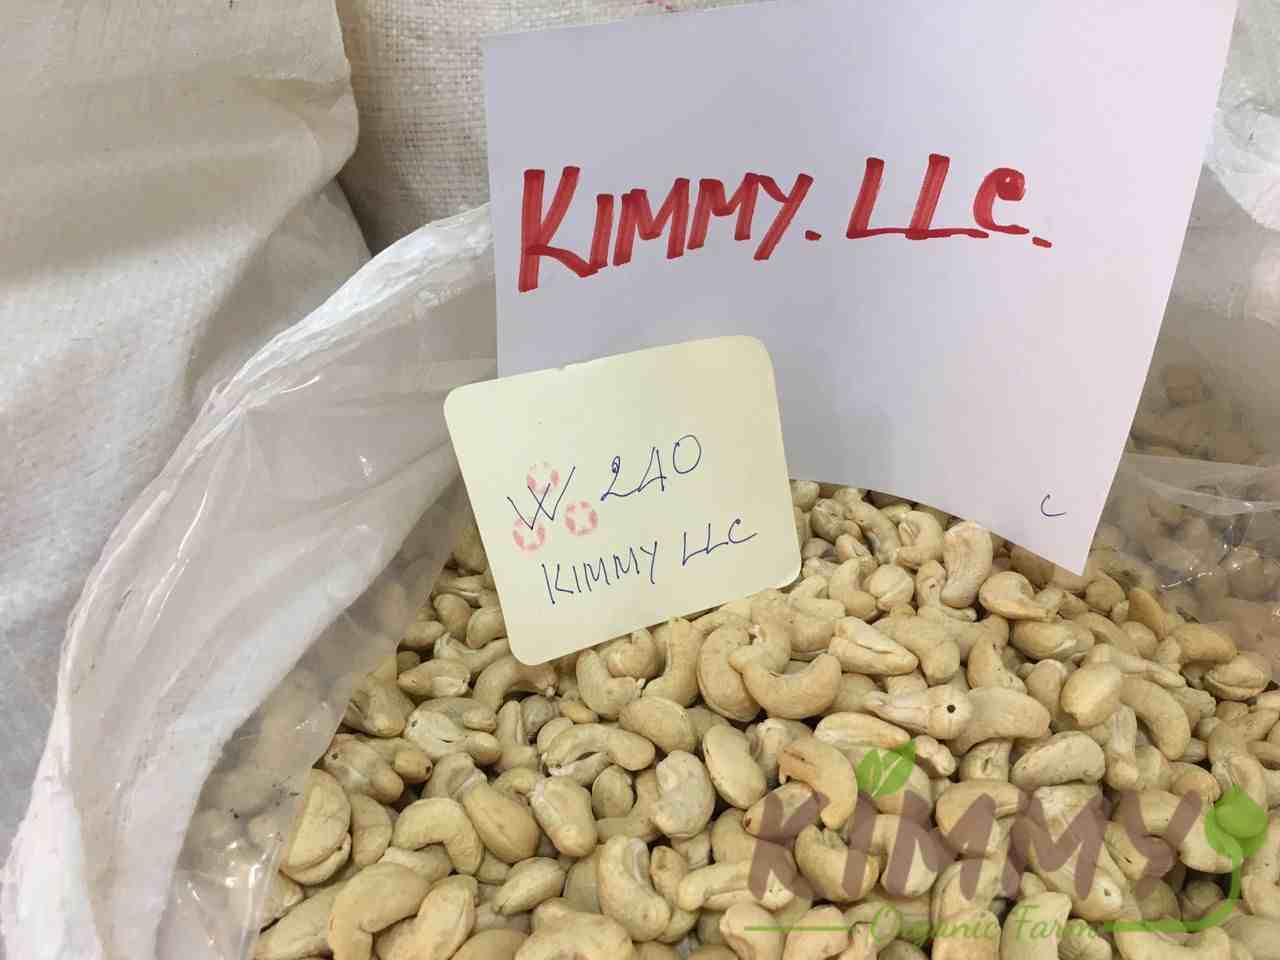 W240 is the best cashew nut of Vietnamese origin.